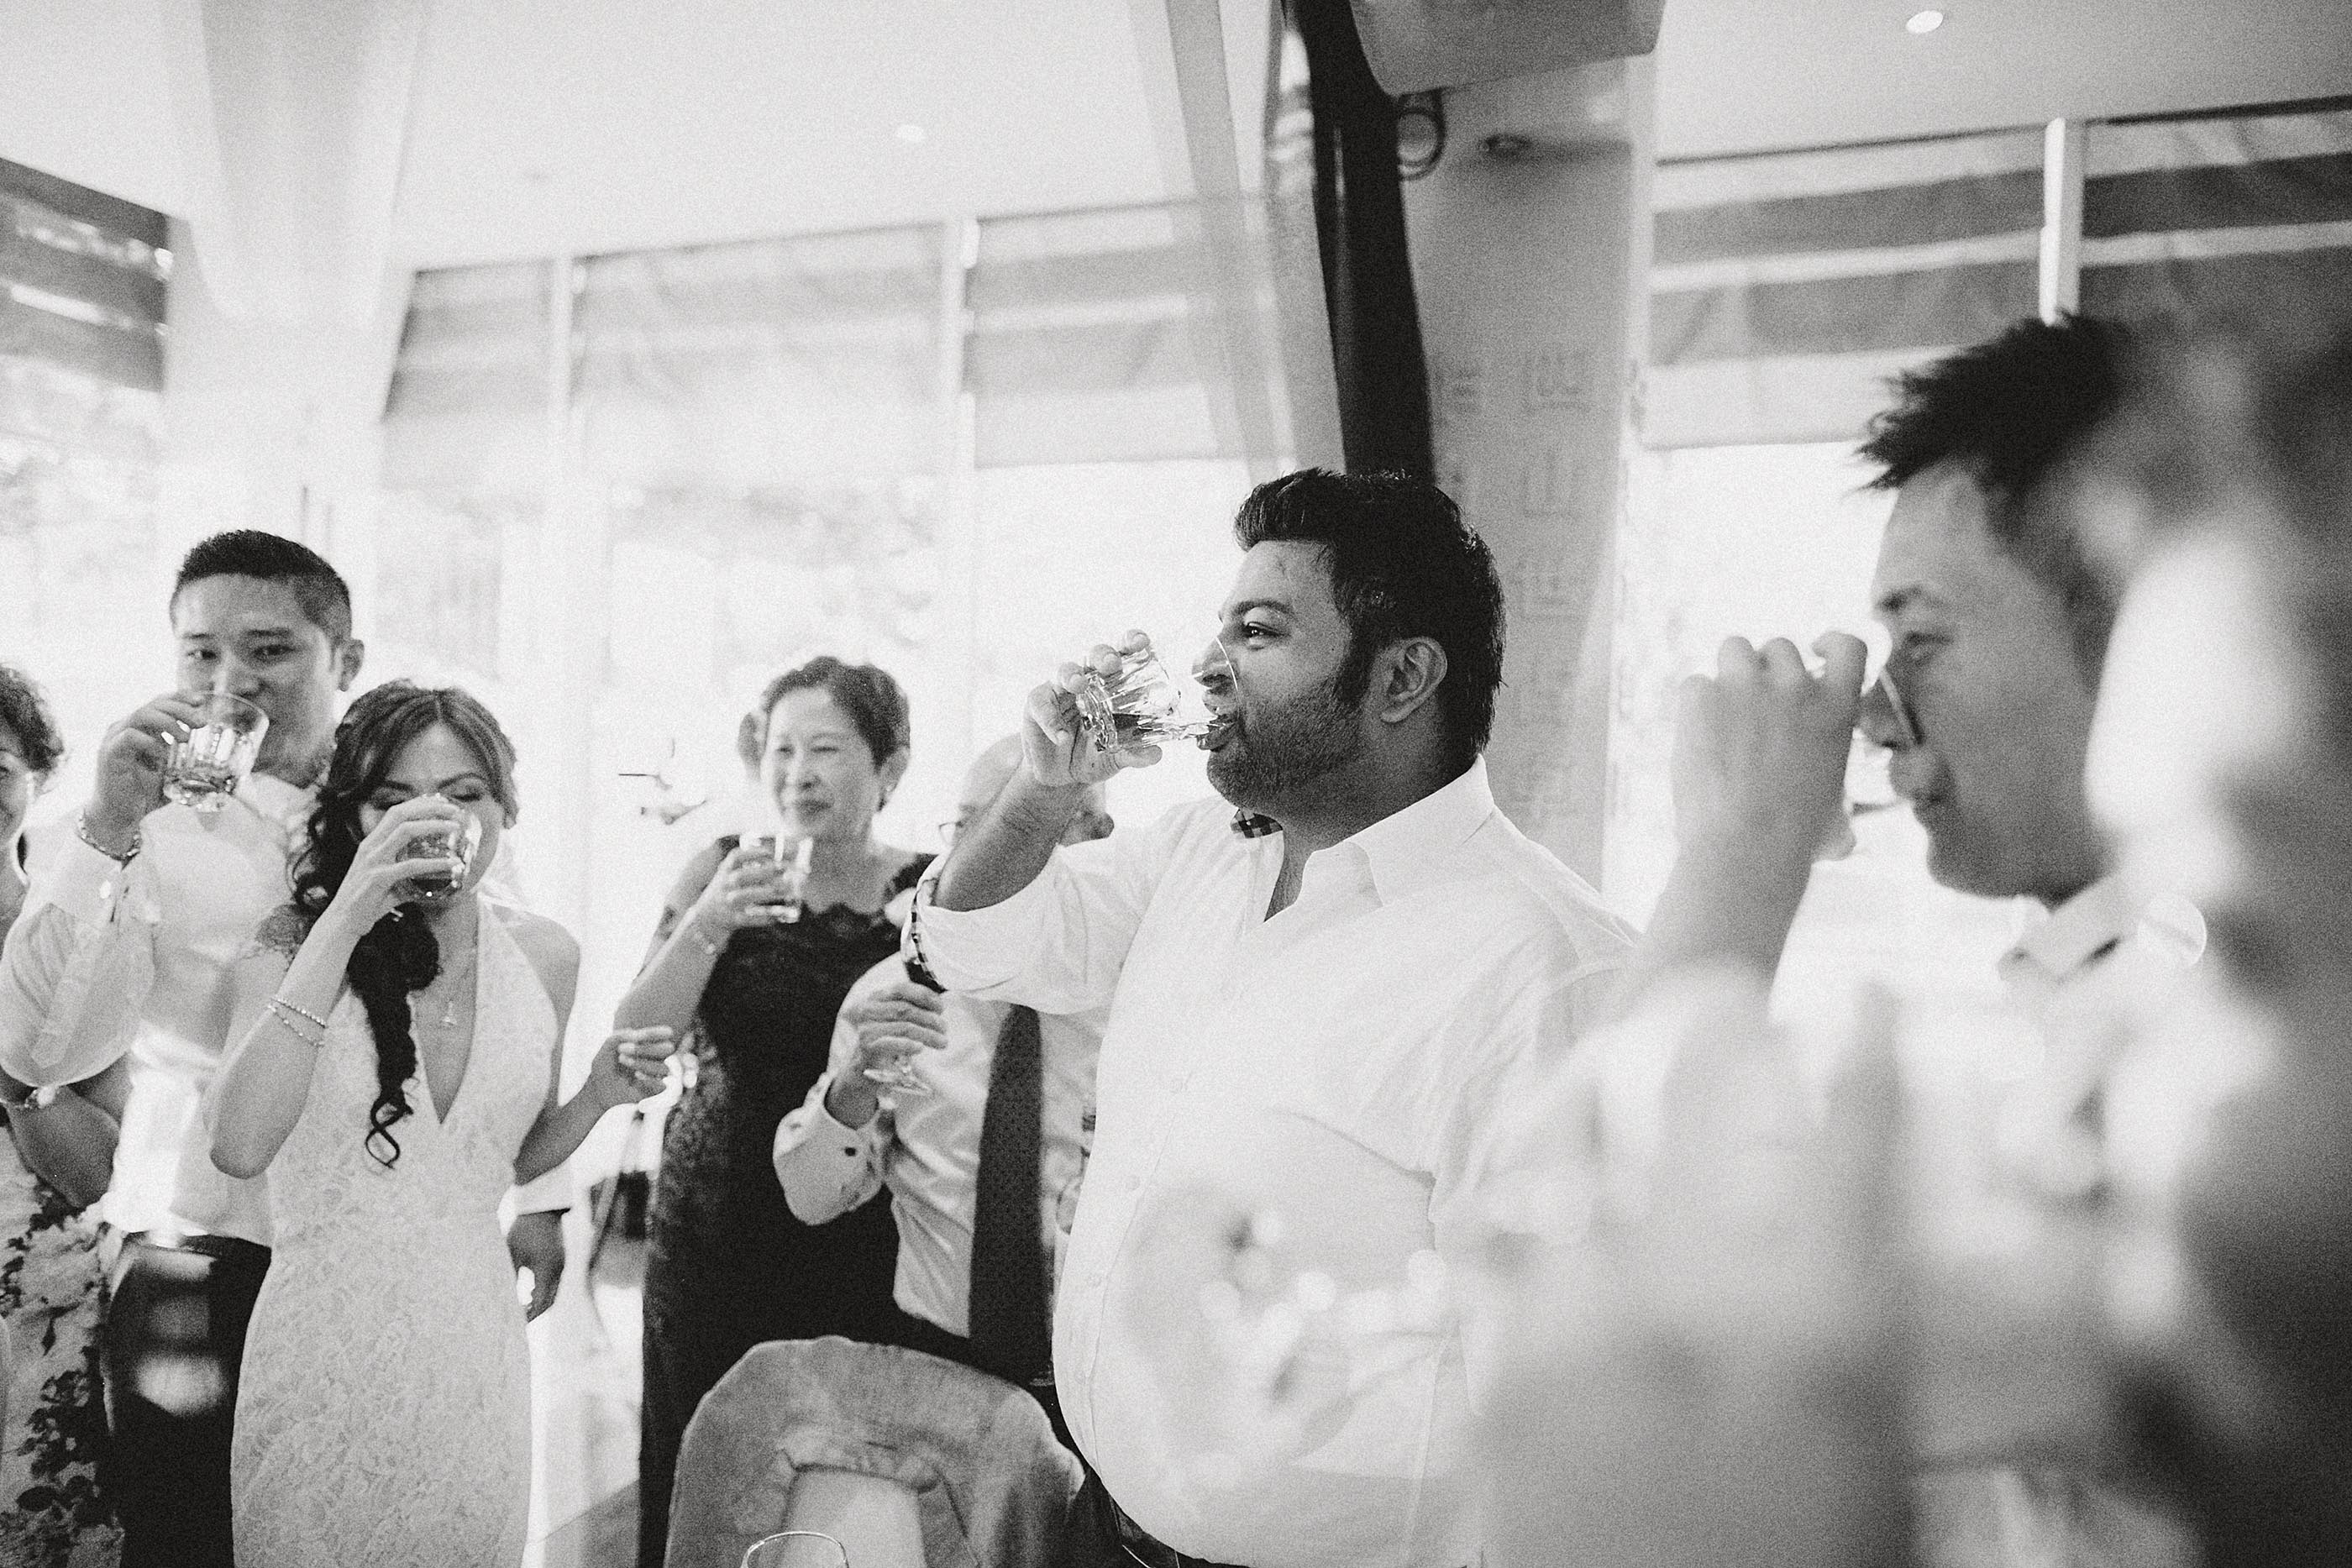 nicholas-lau-photo-photography-fine-art-film-wedding-london-asian-chinese-uk-mulitcultural-ceremony-reception-black-white-china-boulevard-guests-drinking-toasts